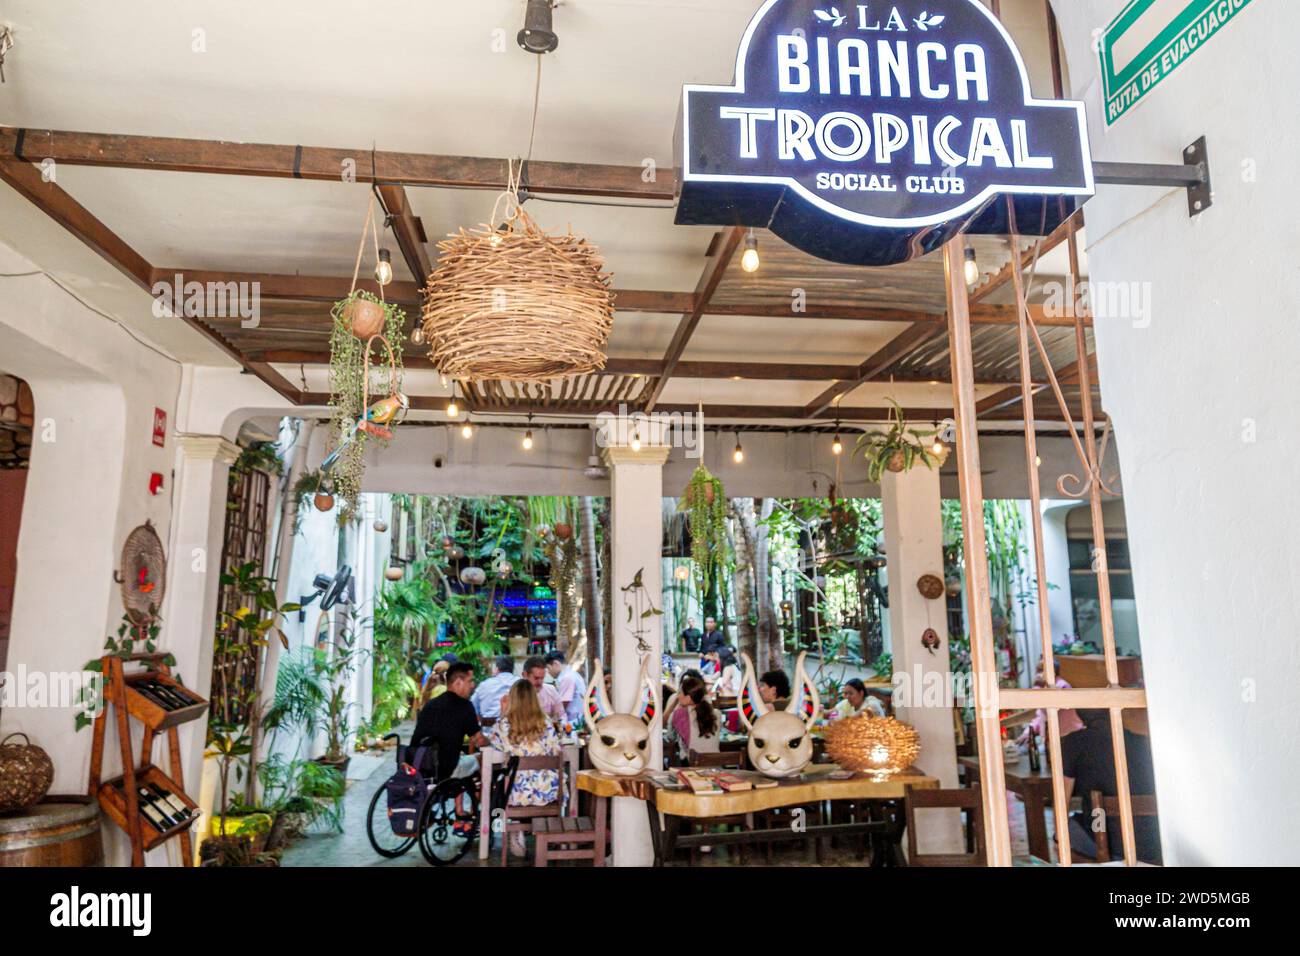 Merida Mexico,centro historico central historic district,La Bianca Tropical Social Club,inside interior,two 2 languages multiple,bilingual multilingua Stock Photo